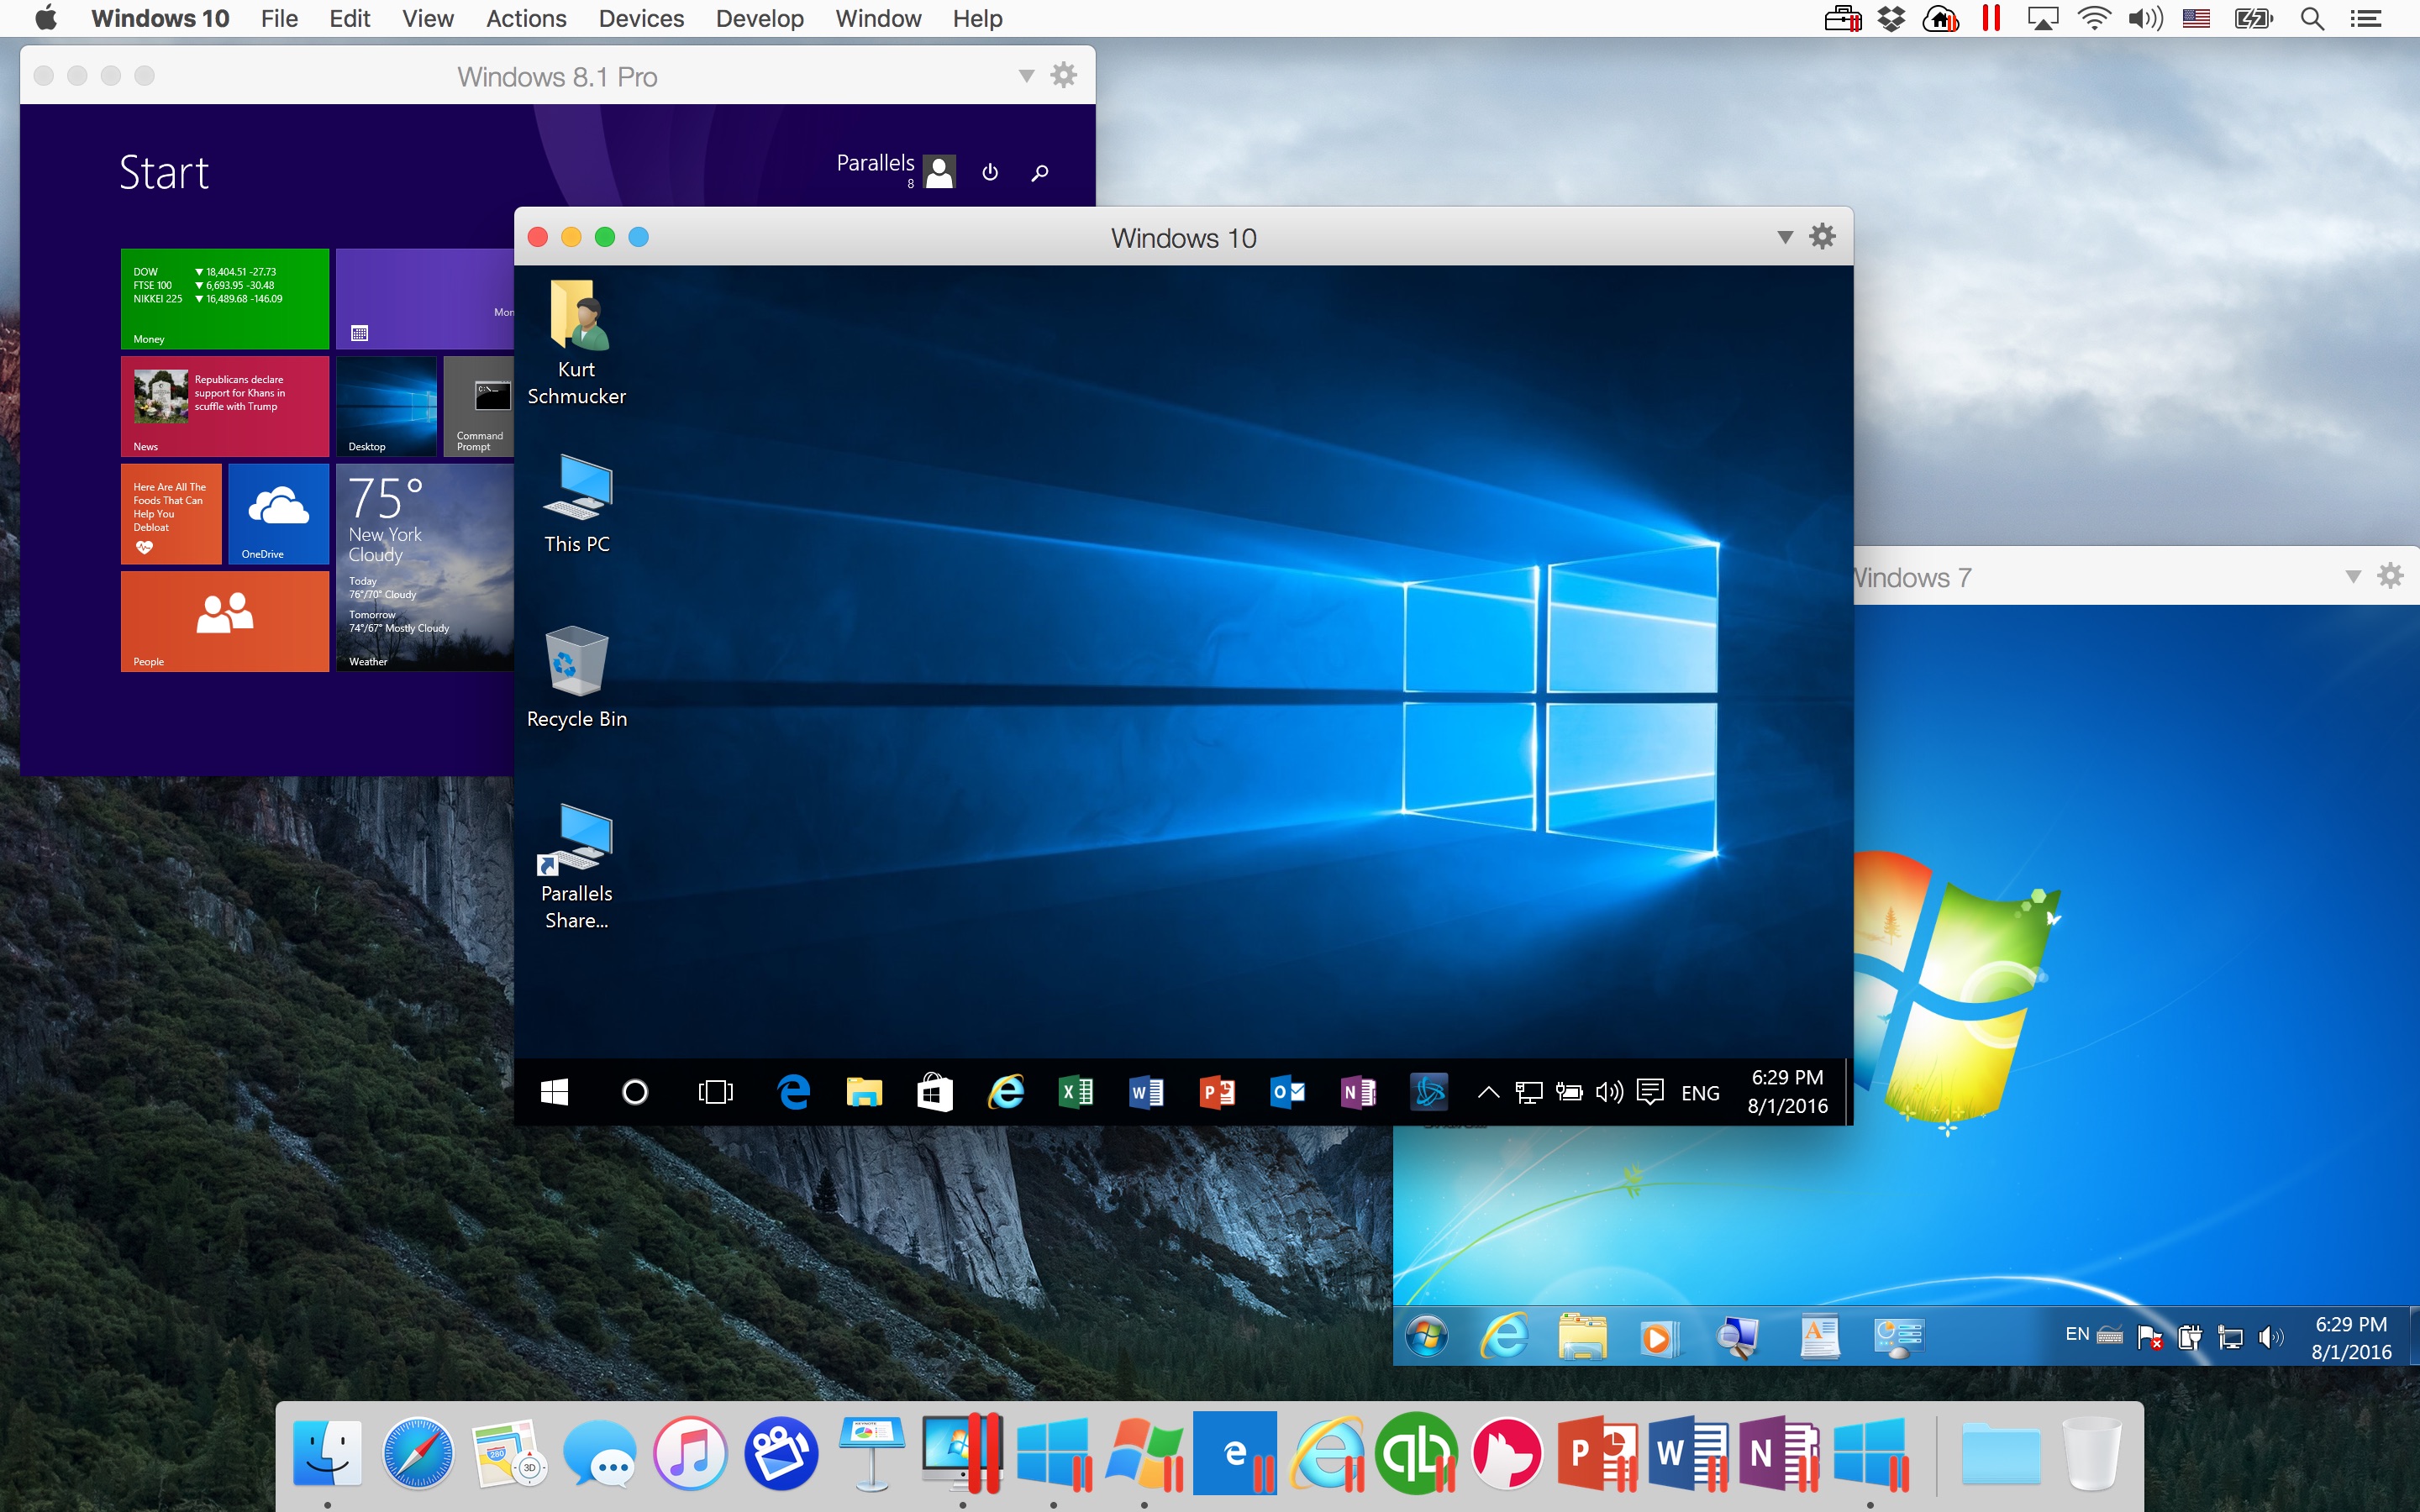 Parallels desktop 12 for mac